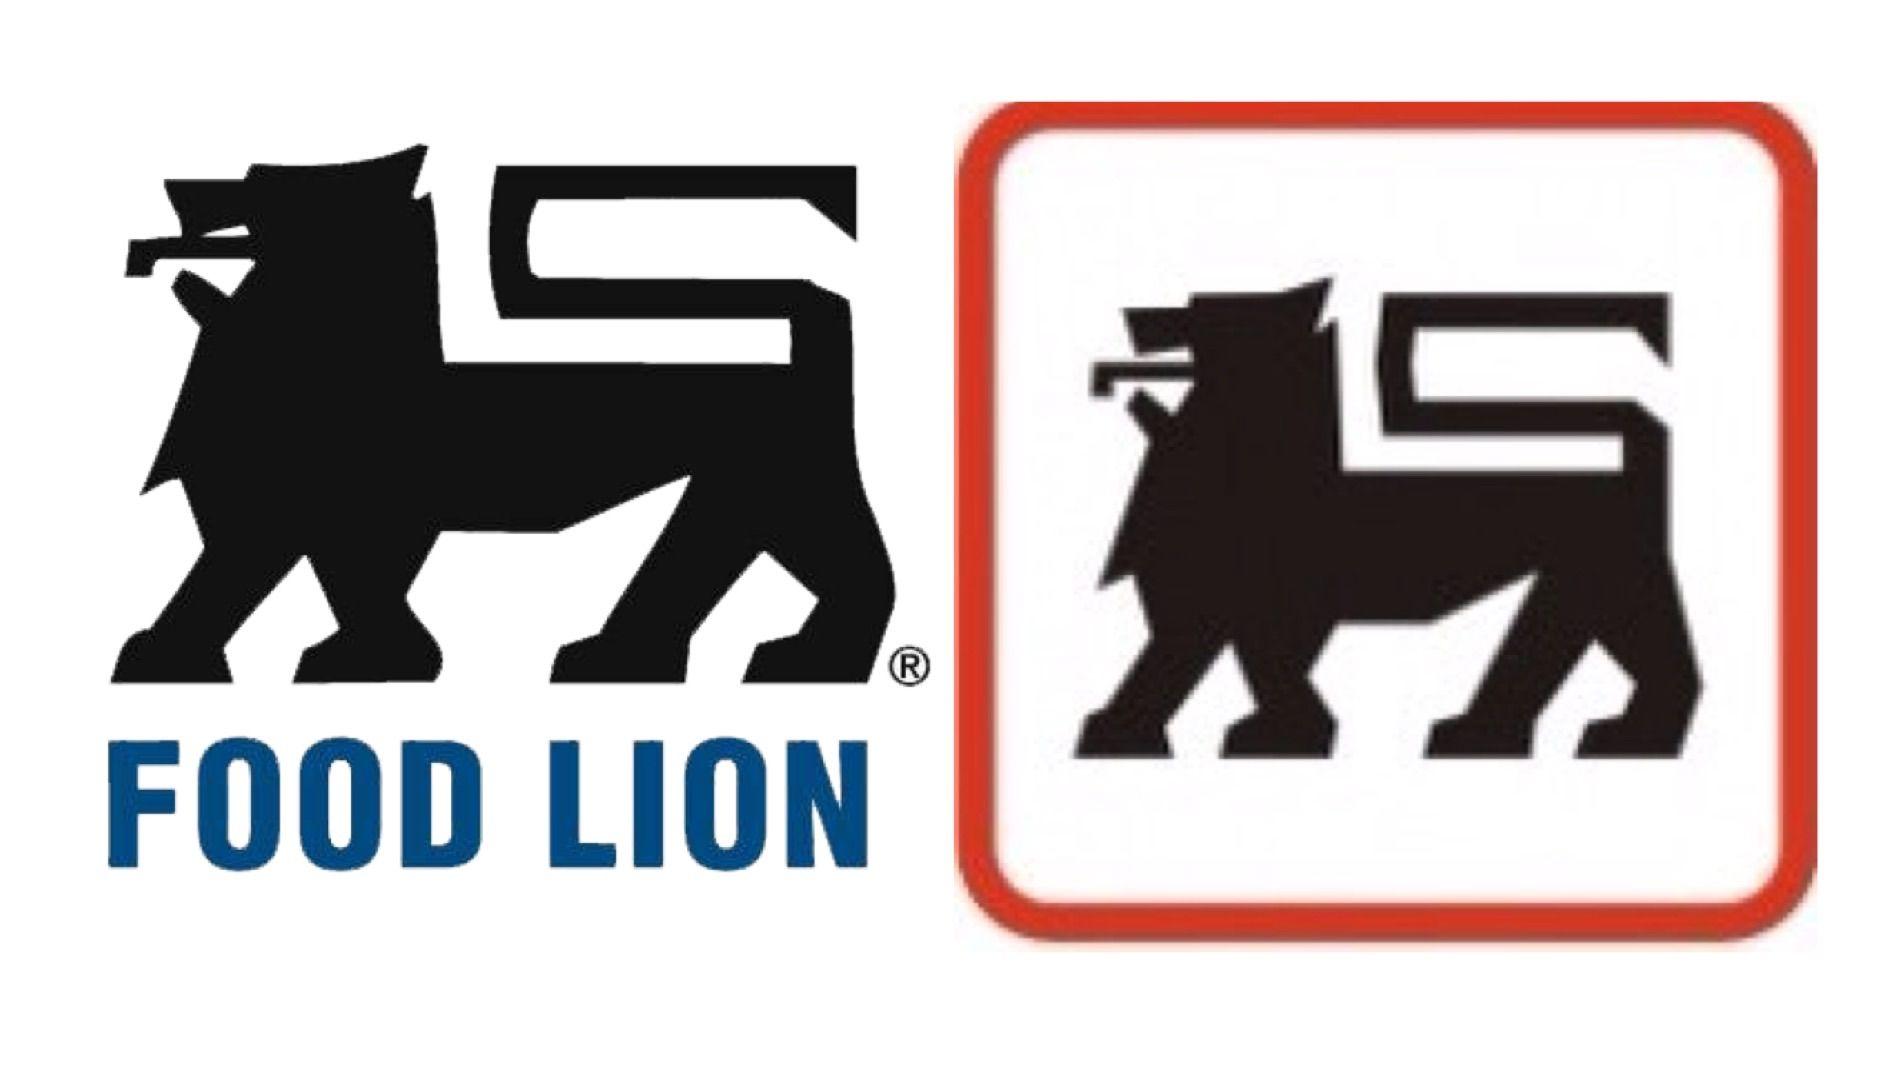 Food Lion Logo - plagiarism this plagiarizing of the Food Lion logo?